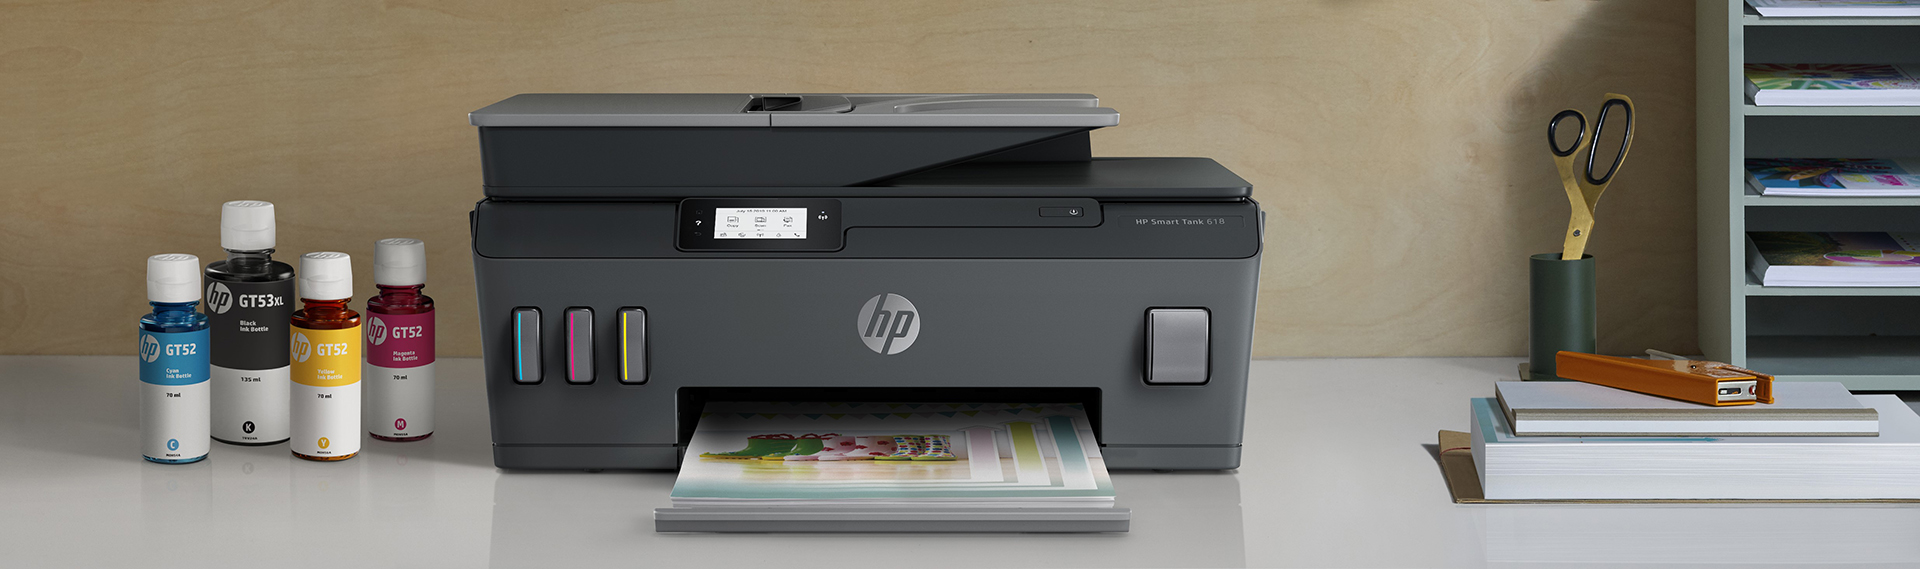 Promocja Cashback – drukarki HP do domu i małego biura